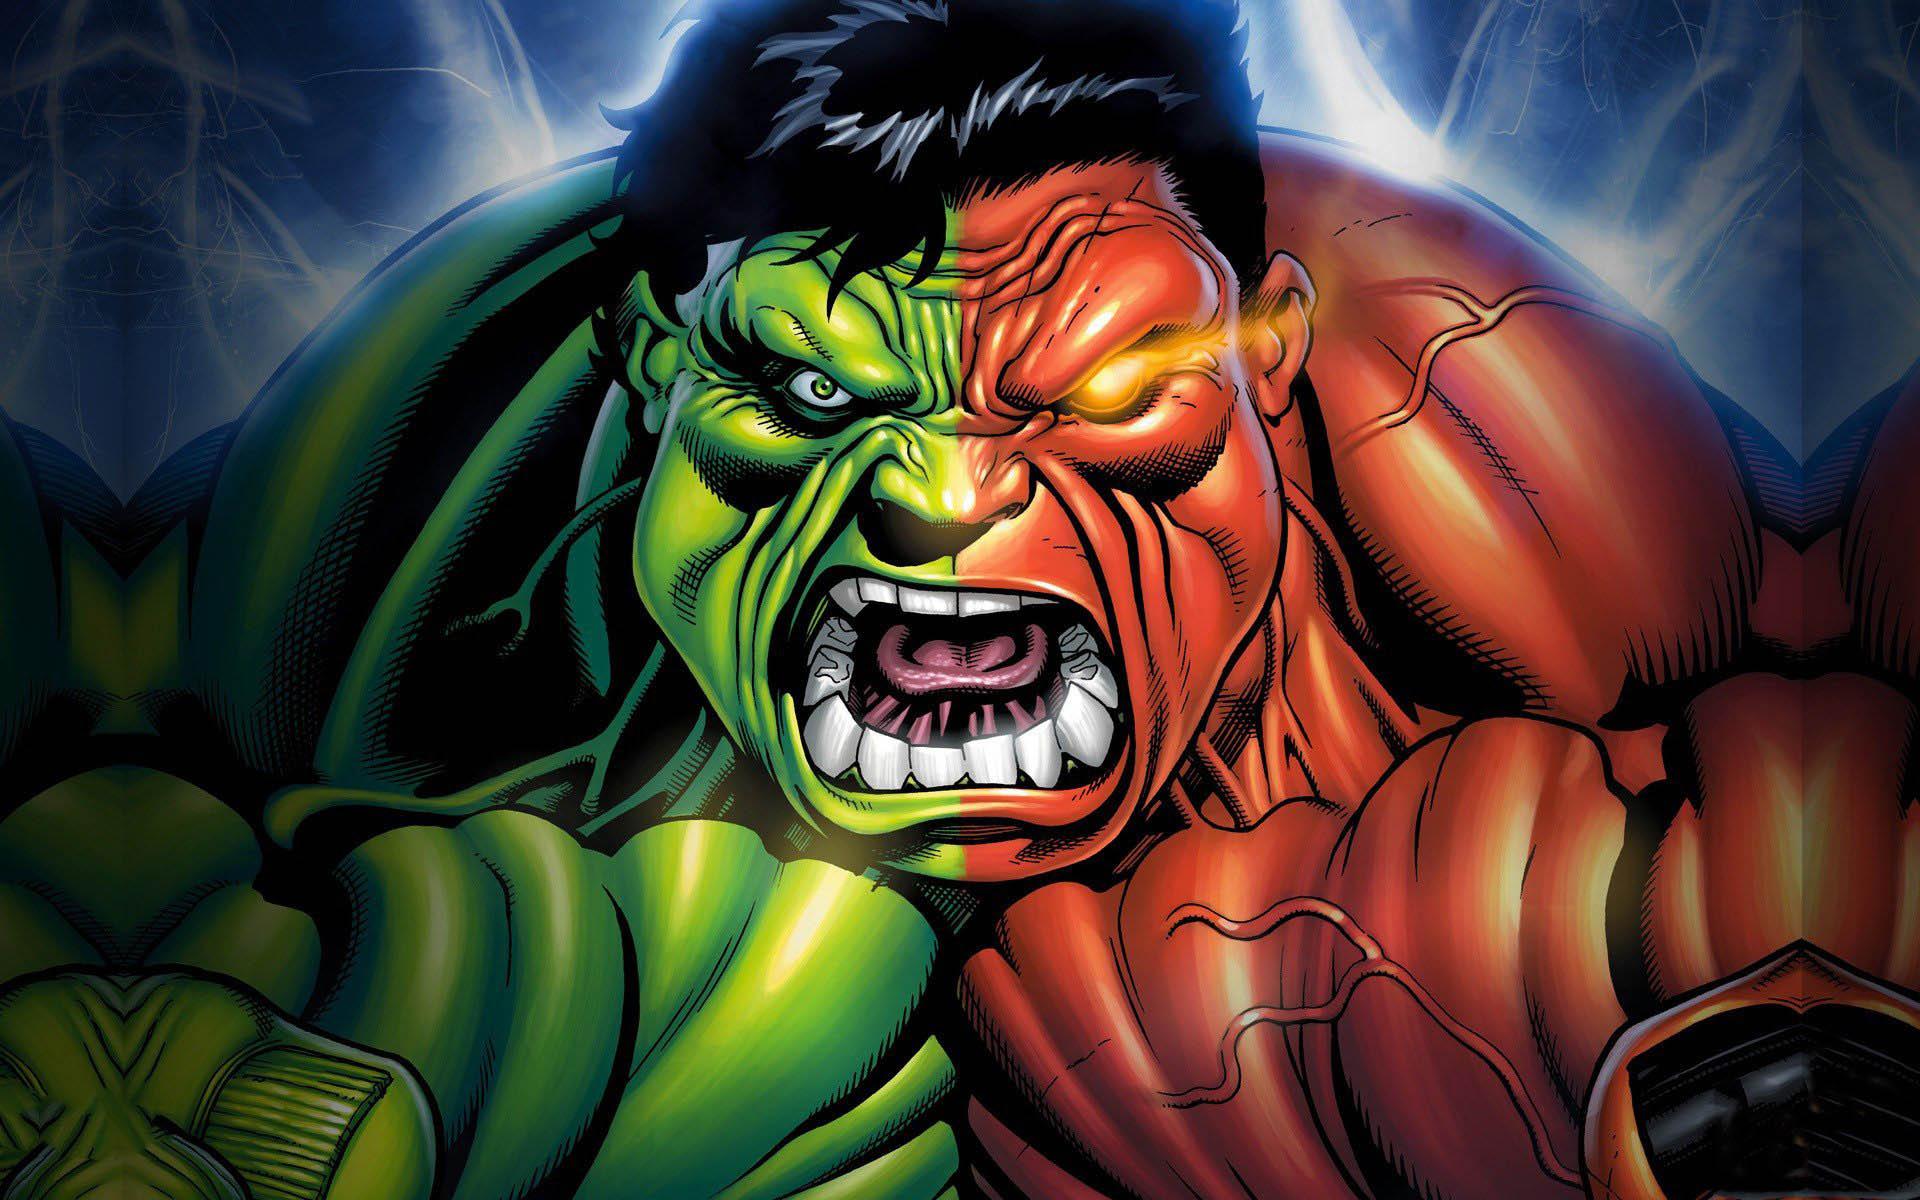 هالک - مارول کامیکس - اونجرز - avengers - hulk - marvel comics